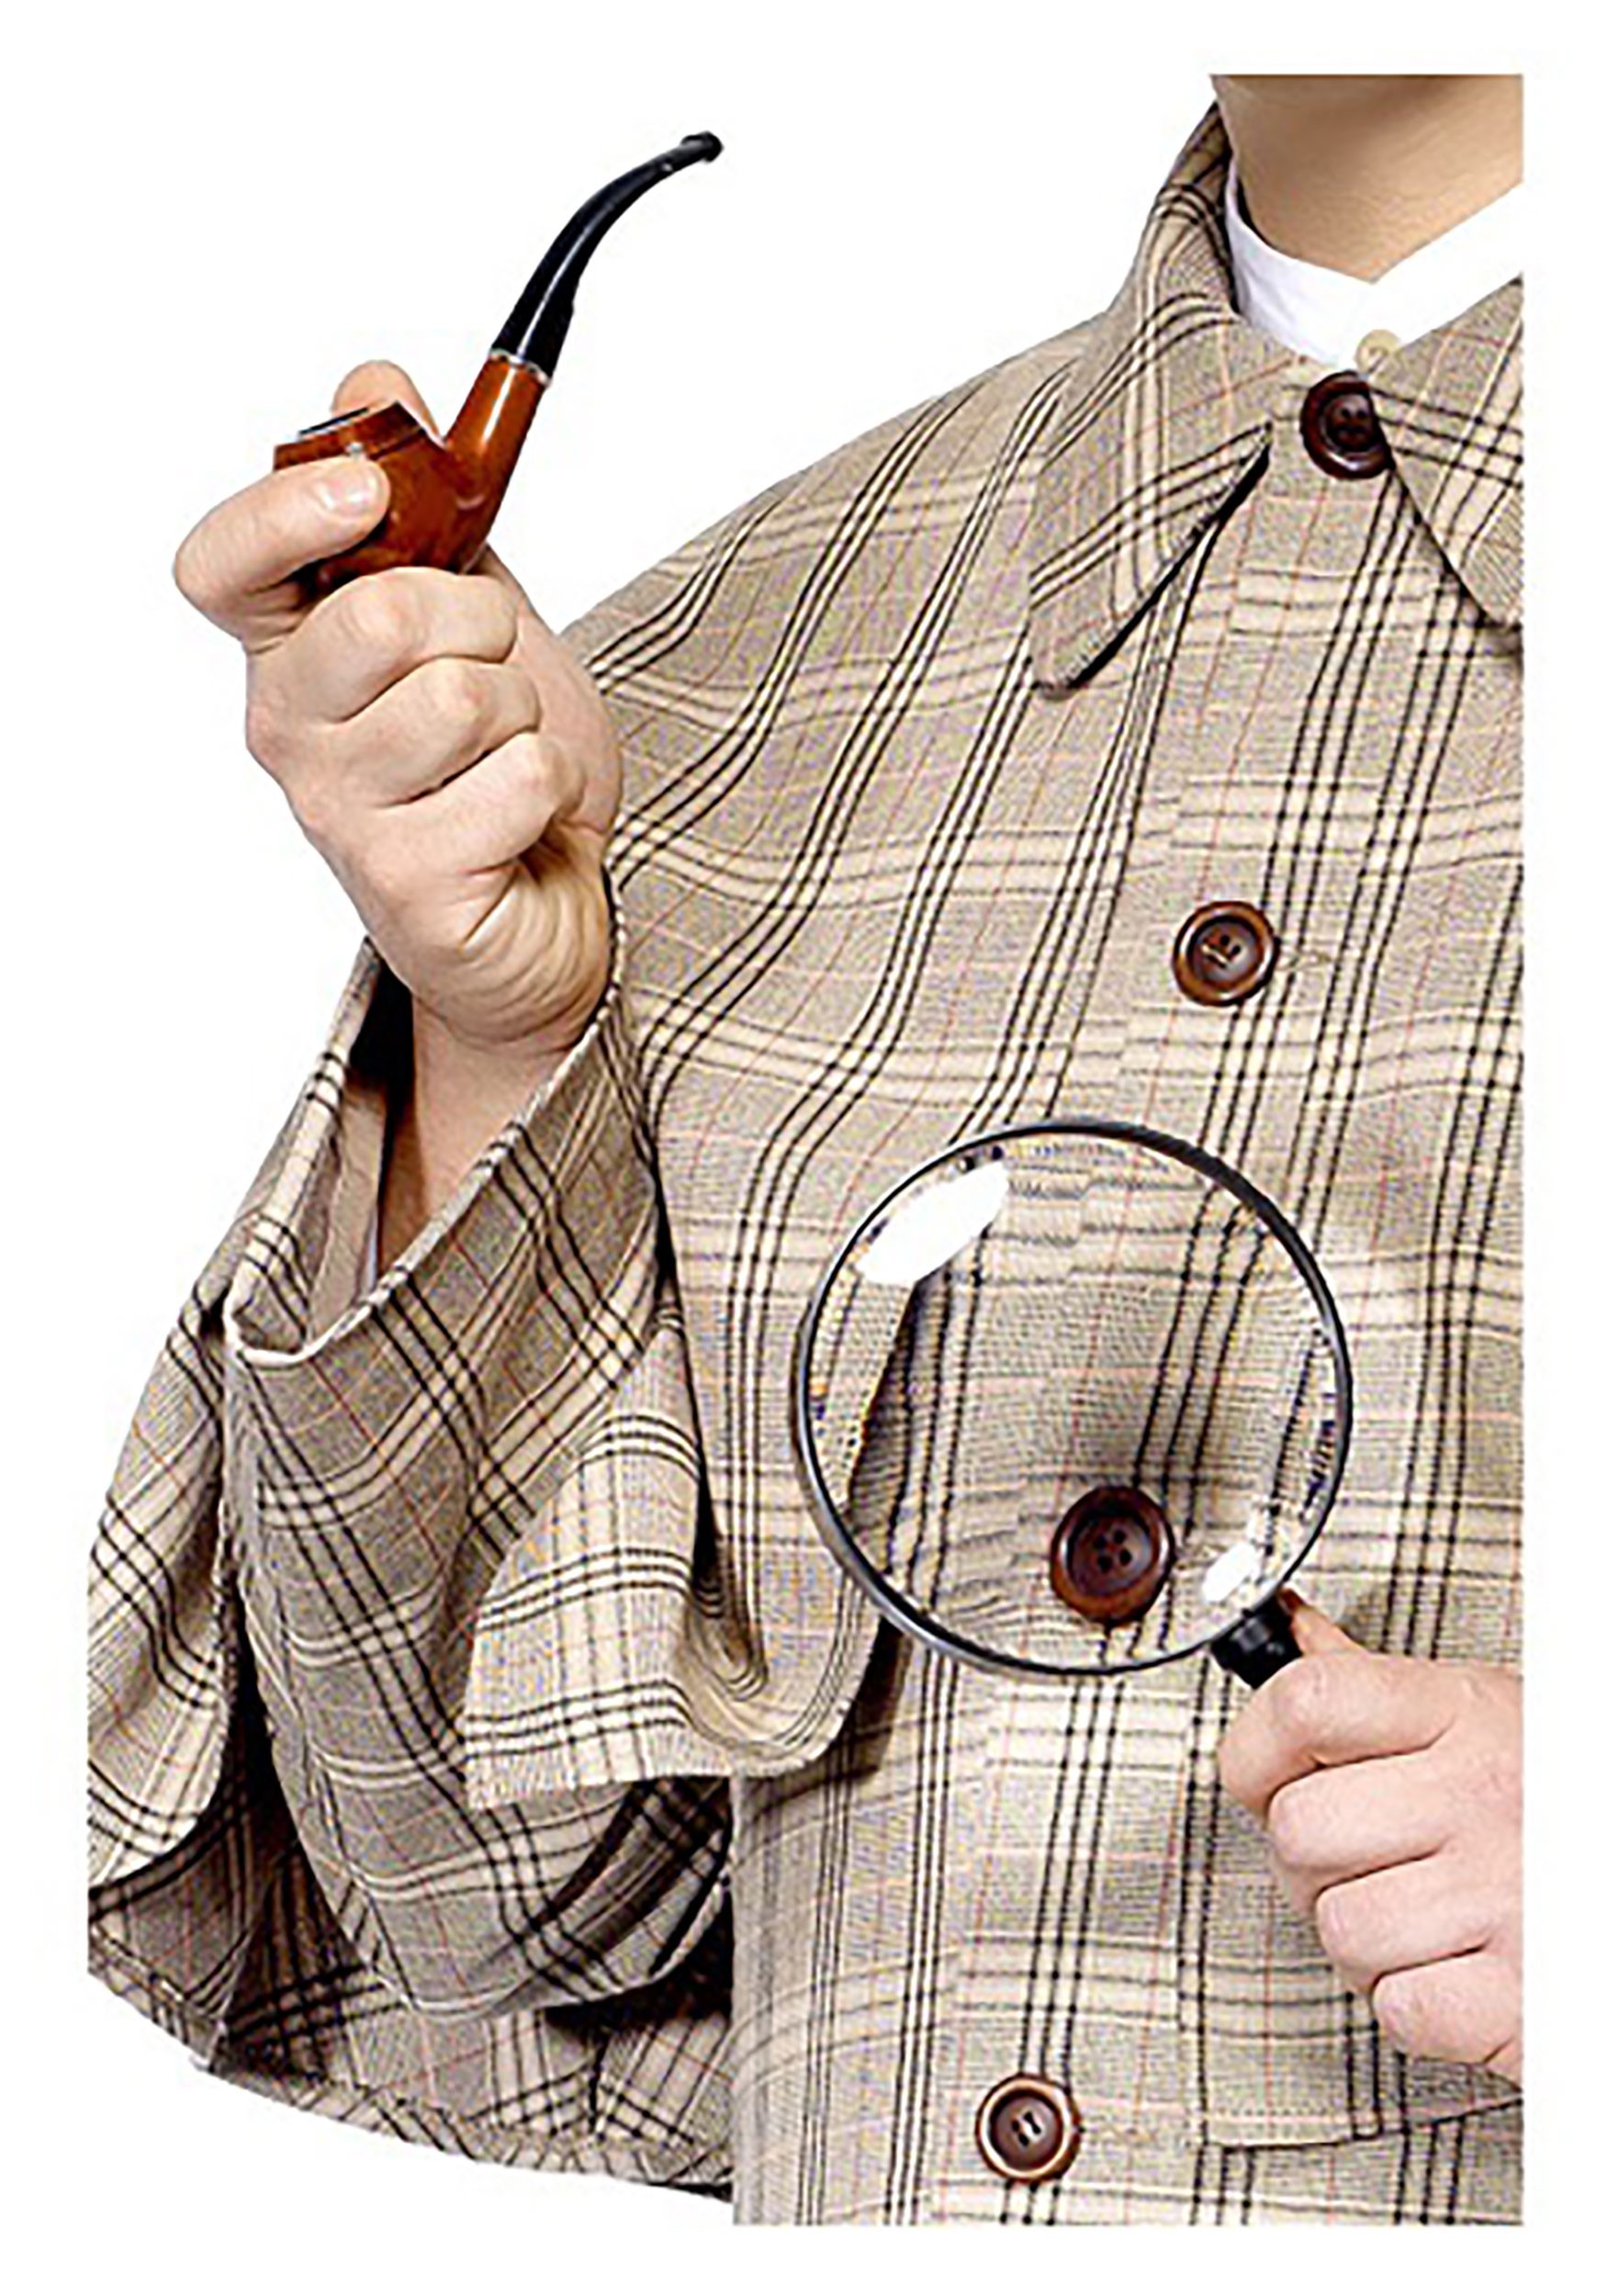 fancy dress accessories Detective/ Sherlock homes kit adult 